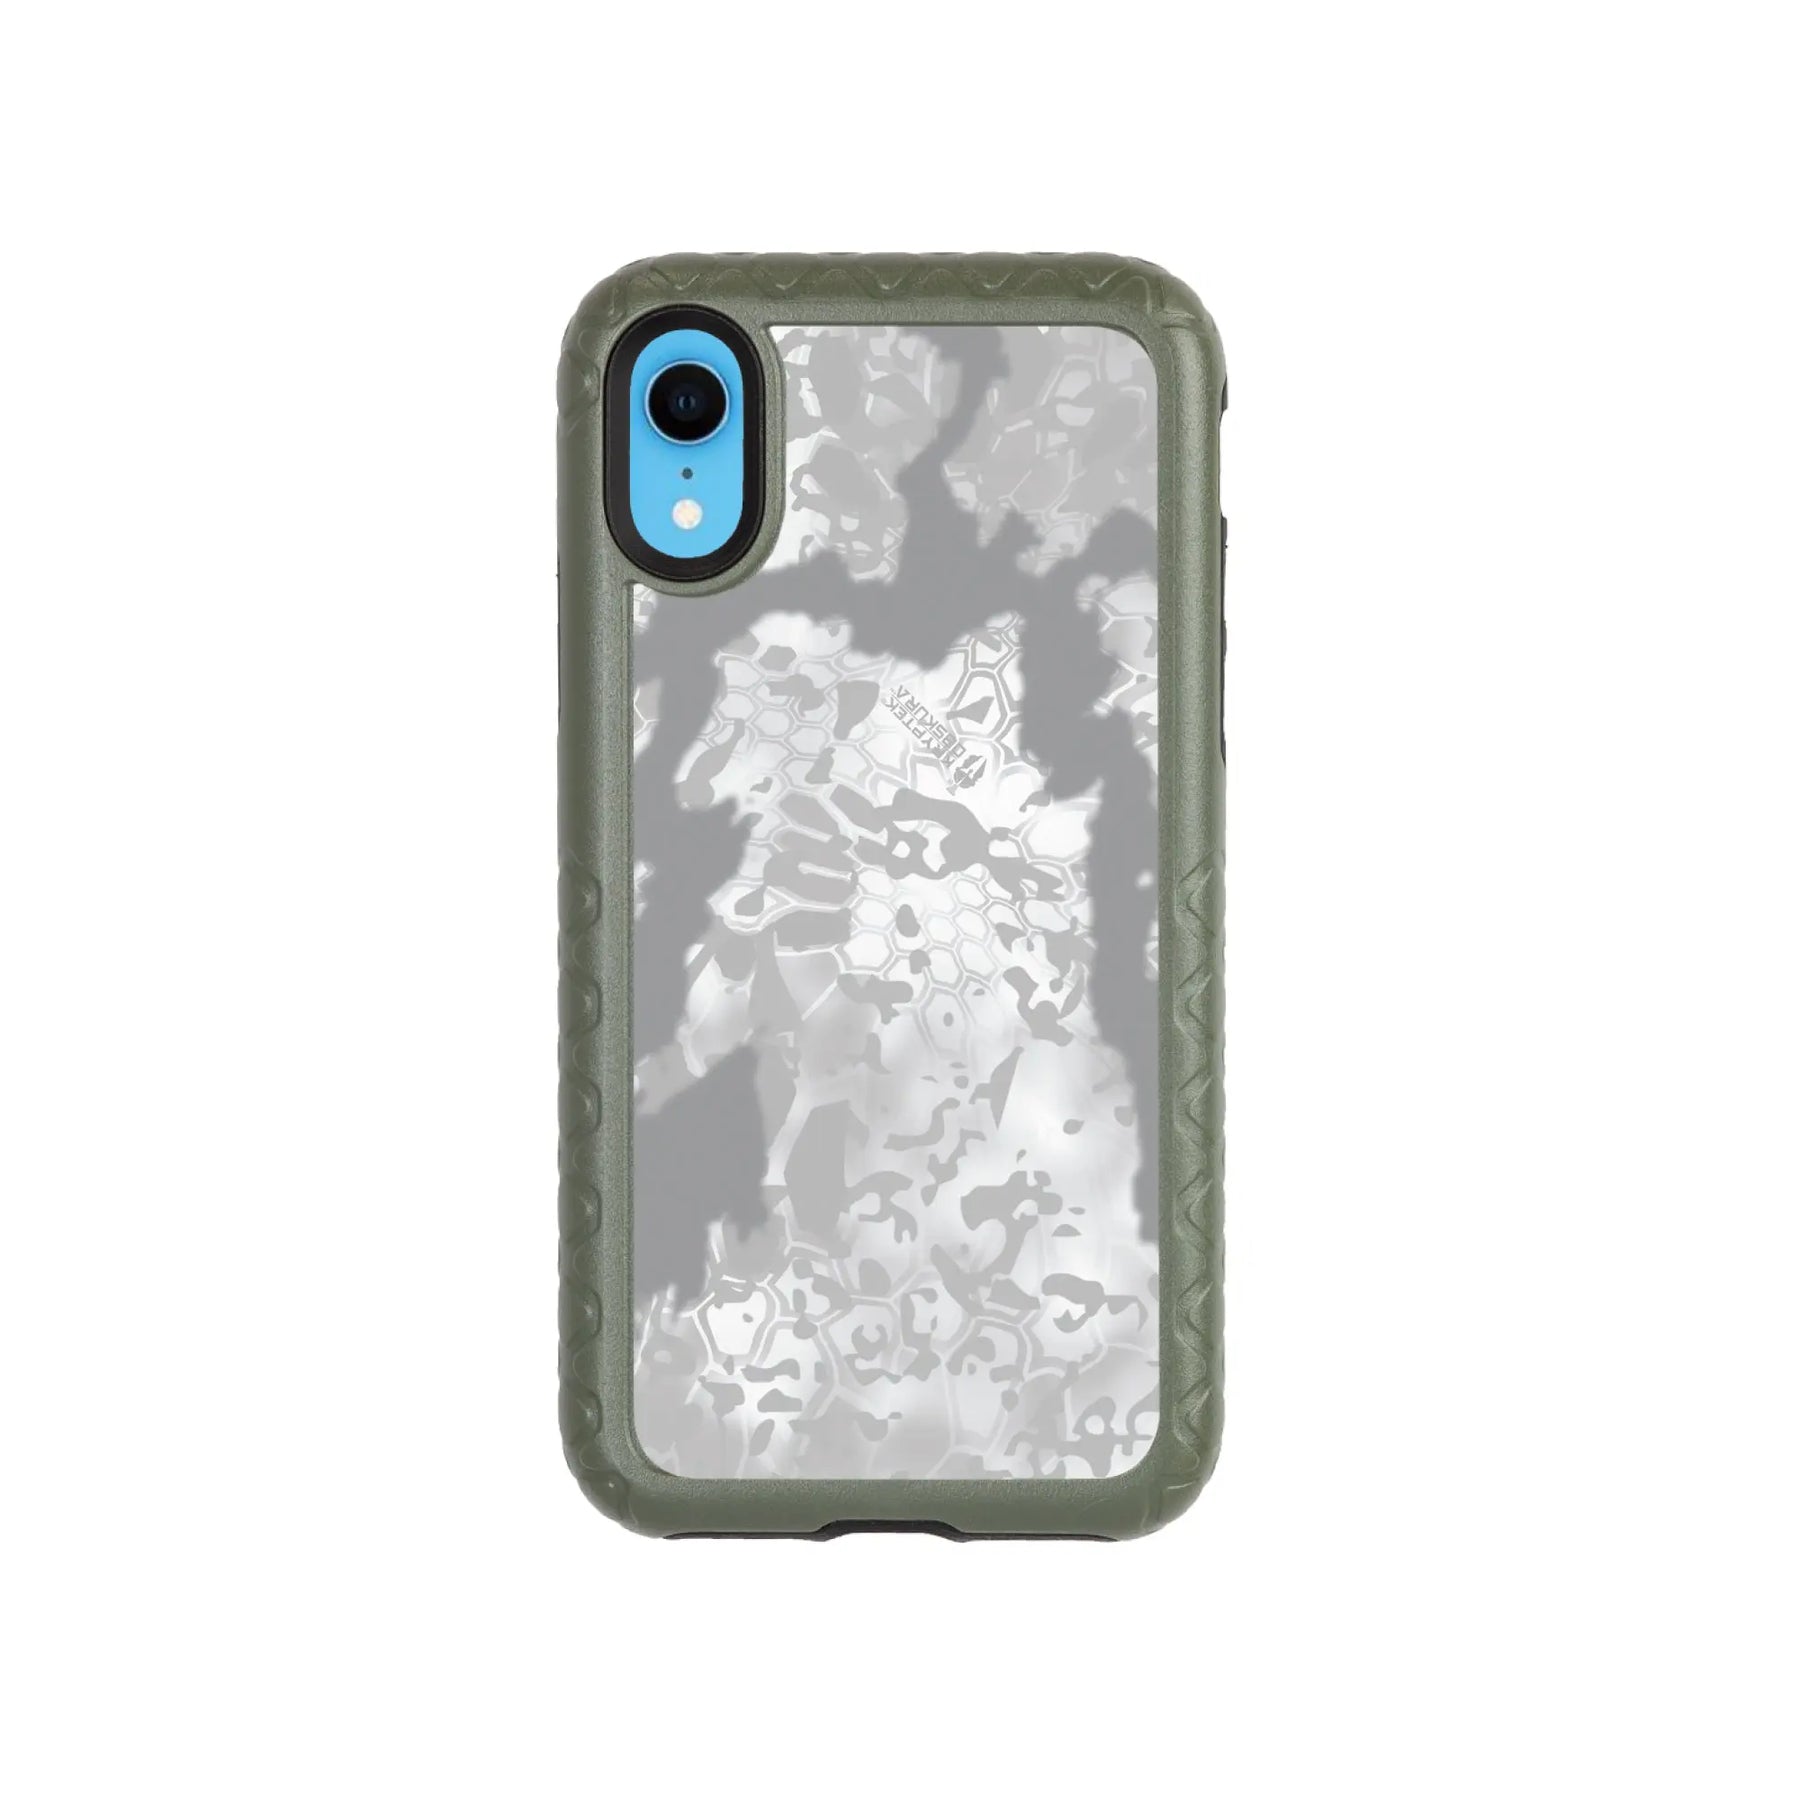 Kryptek Fortitude for Apple iPhone XR - Custom Case - OliveDrabGreenOBSKURANIVIS - cellhelmet